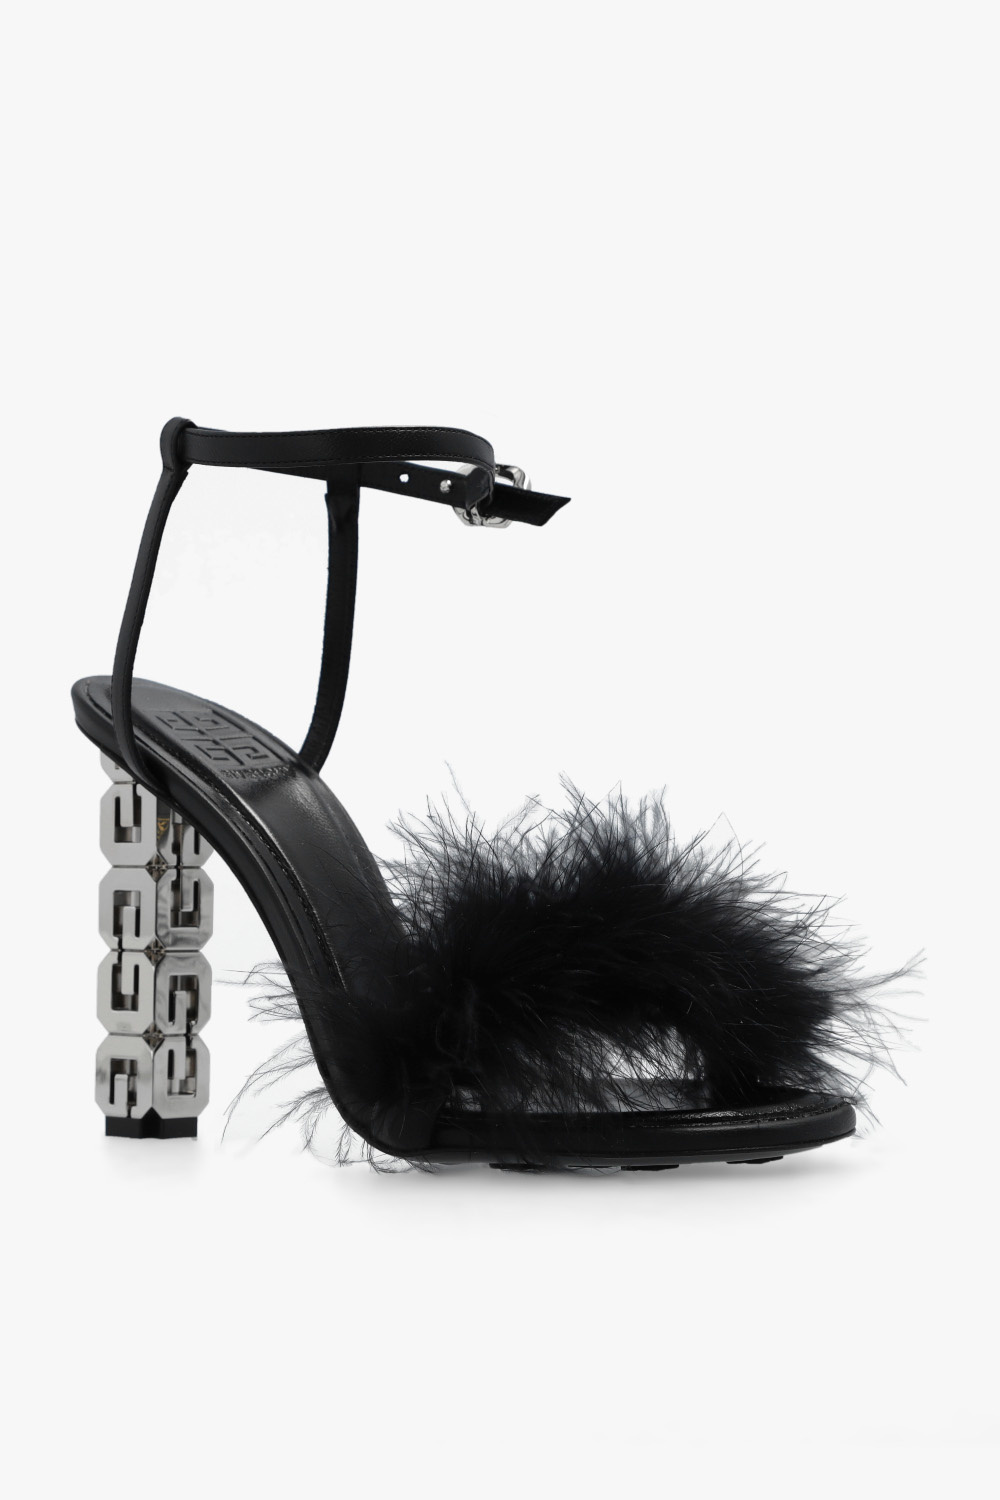 givenchy blazer ‘G Cube’ heeled sandals